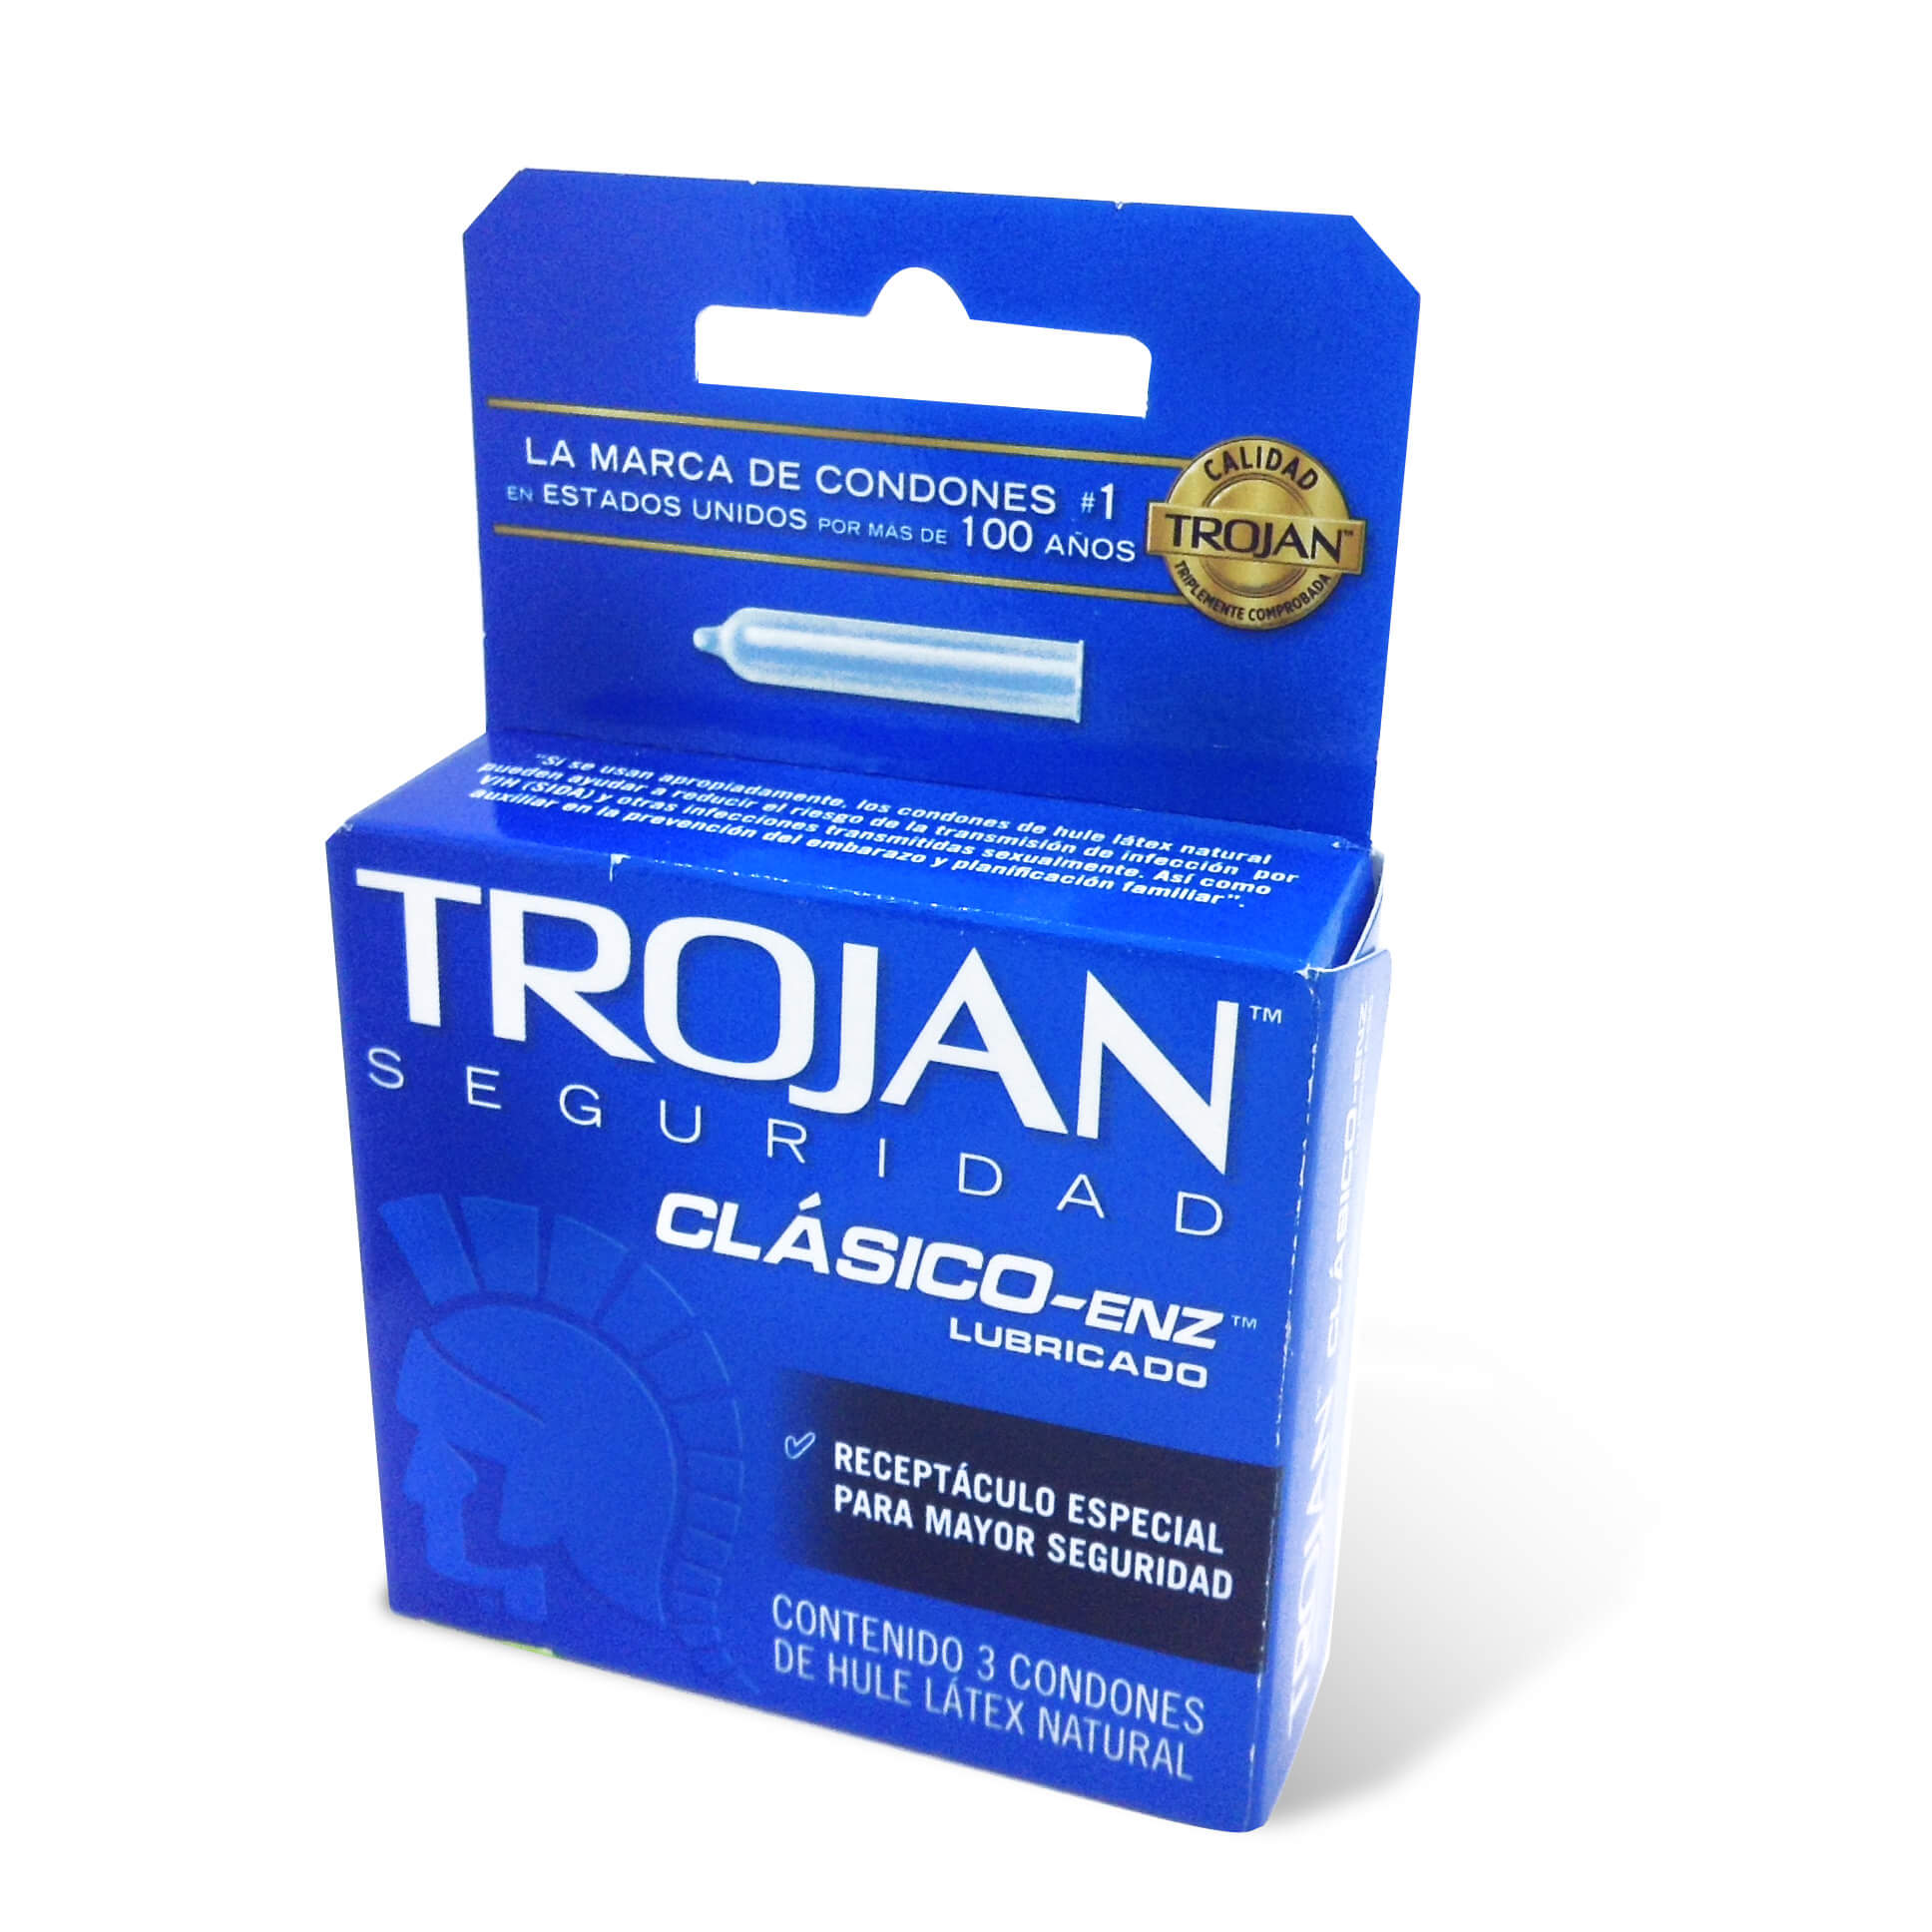 Trojan Clasico-enz